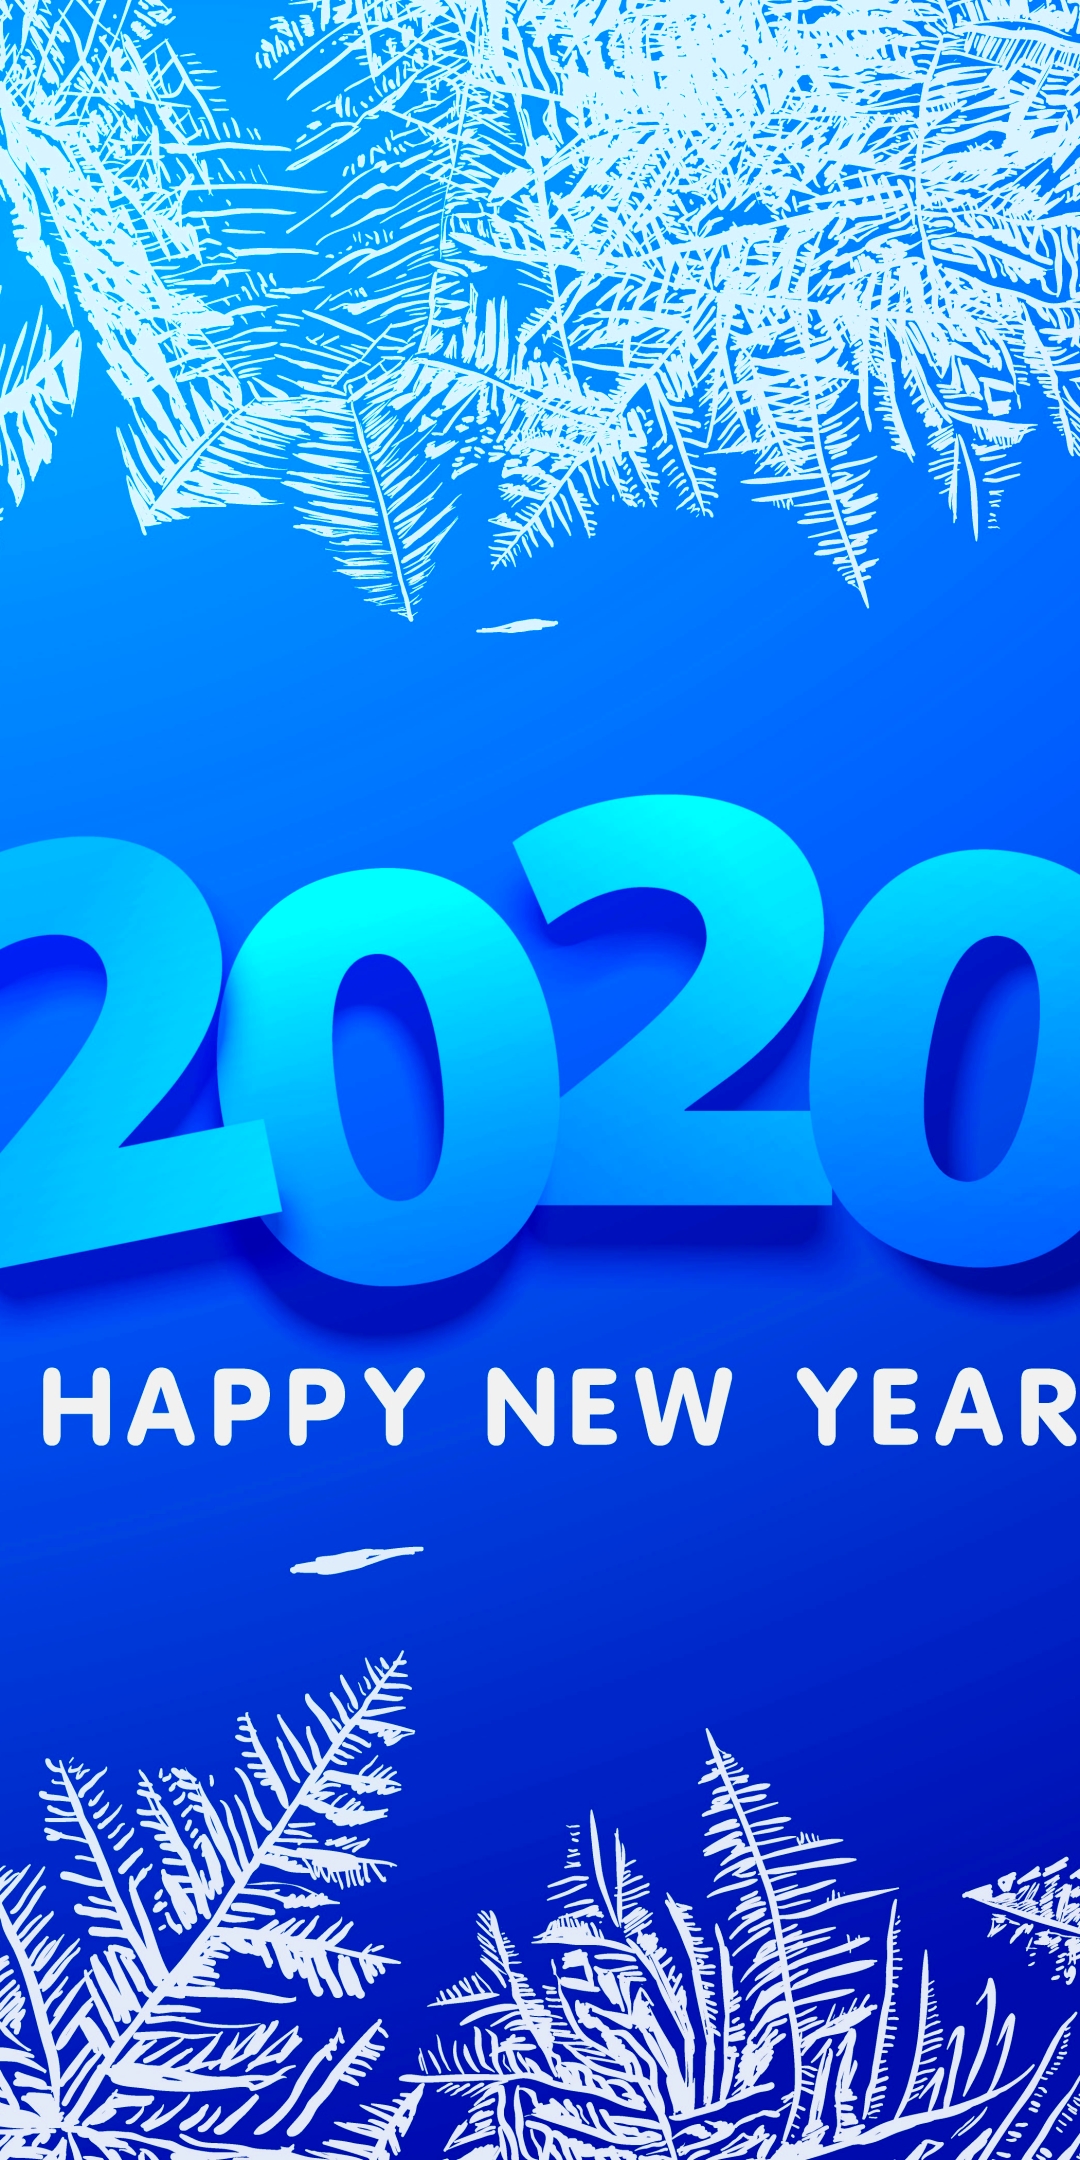 New Year 2020 Phone Wallpaper